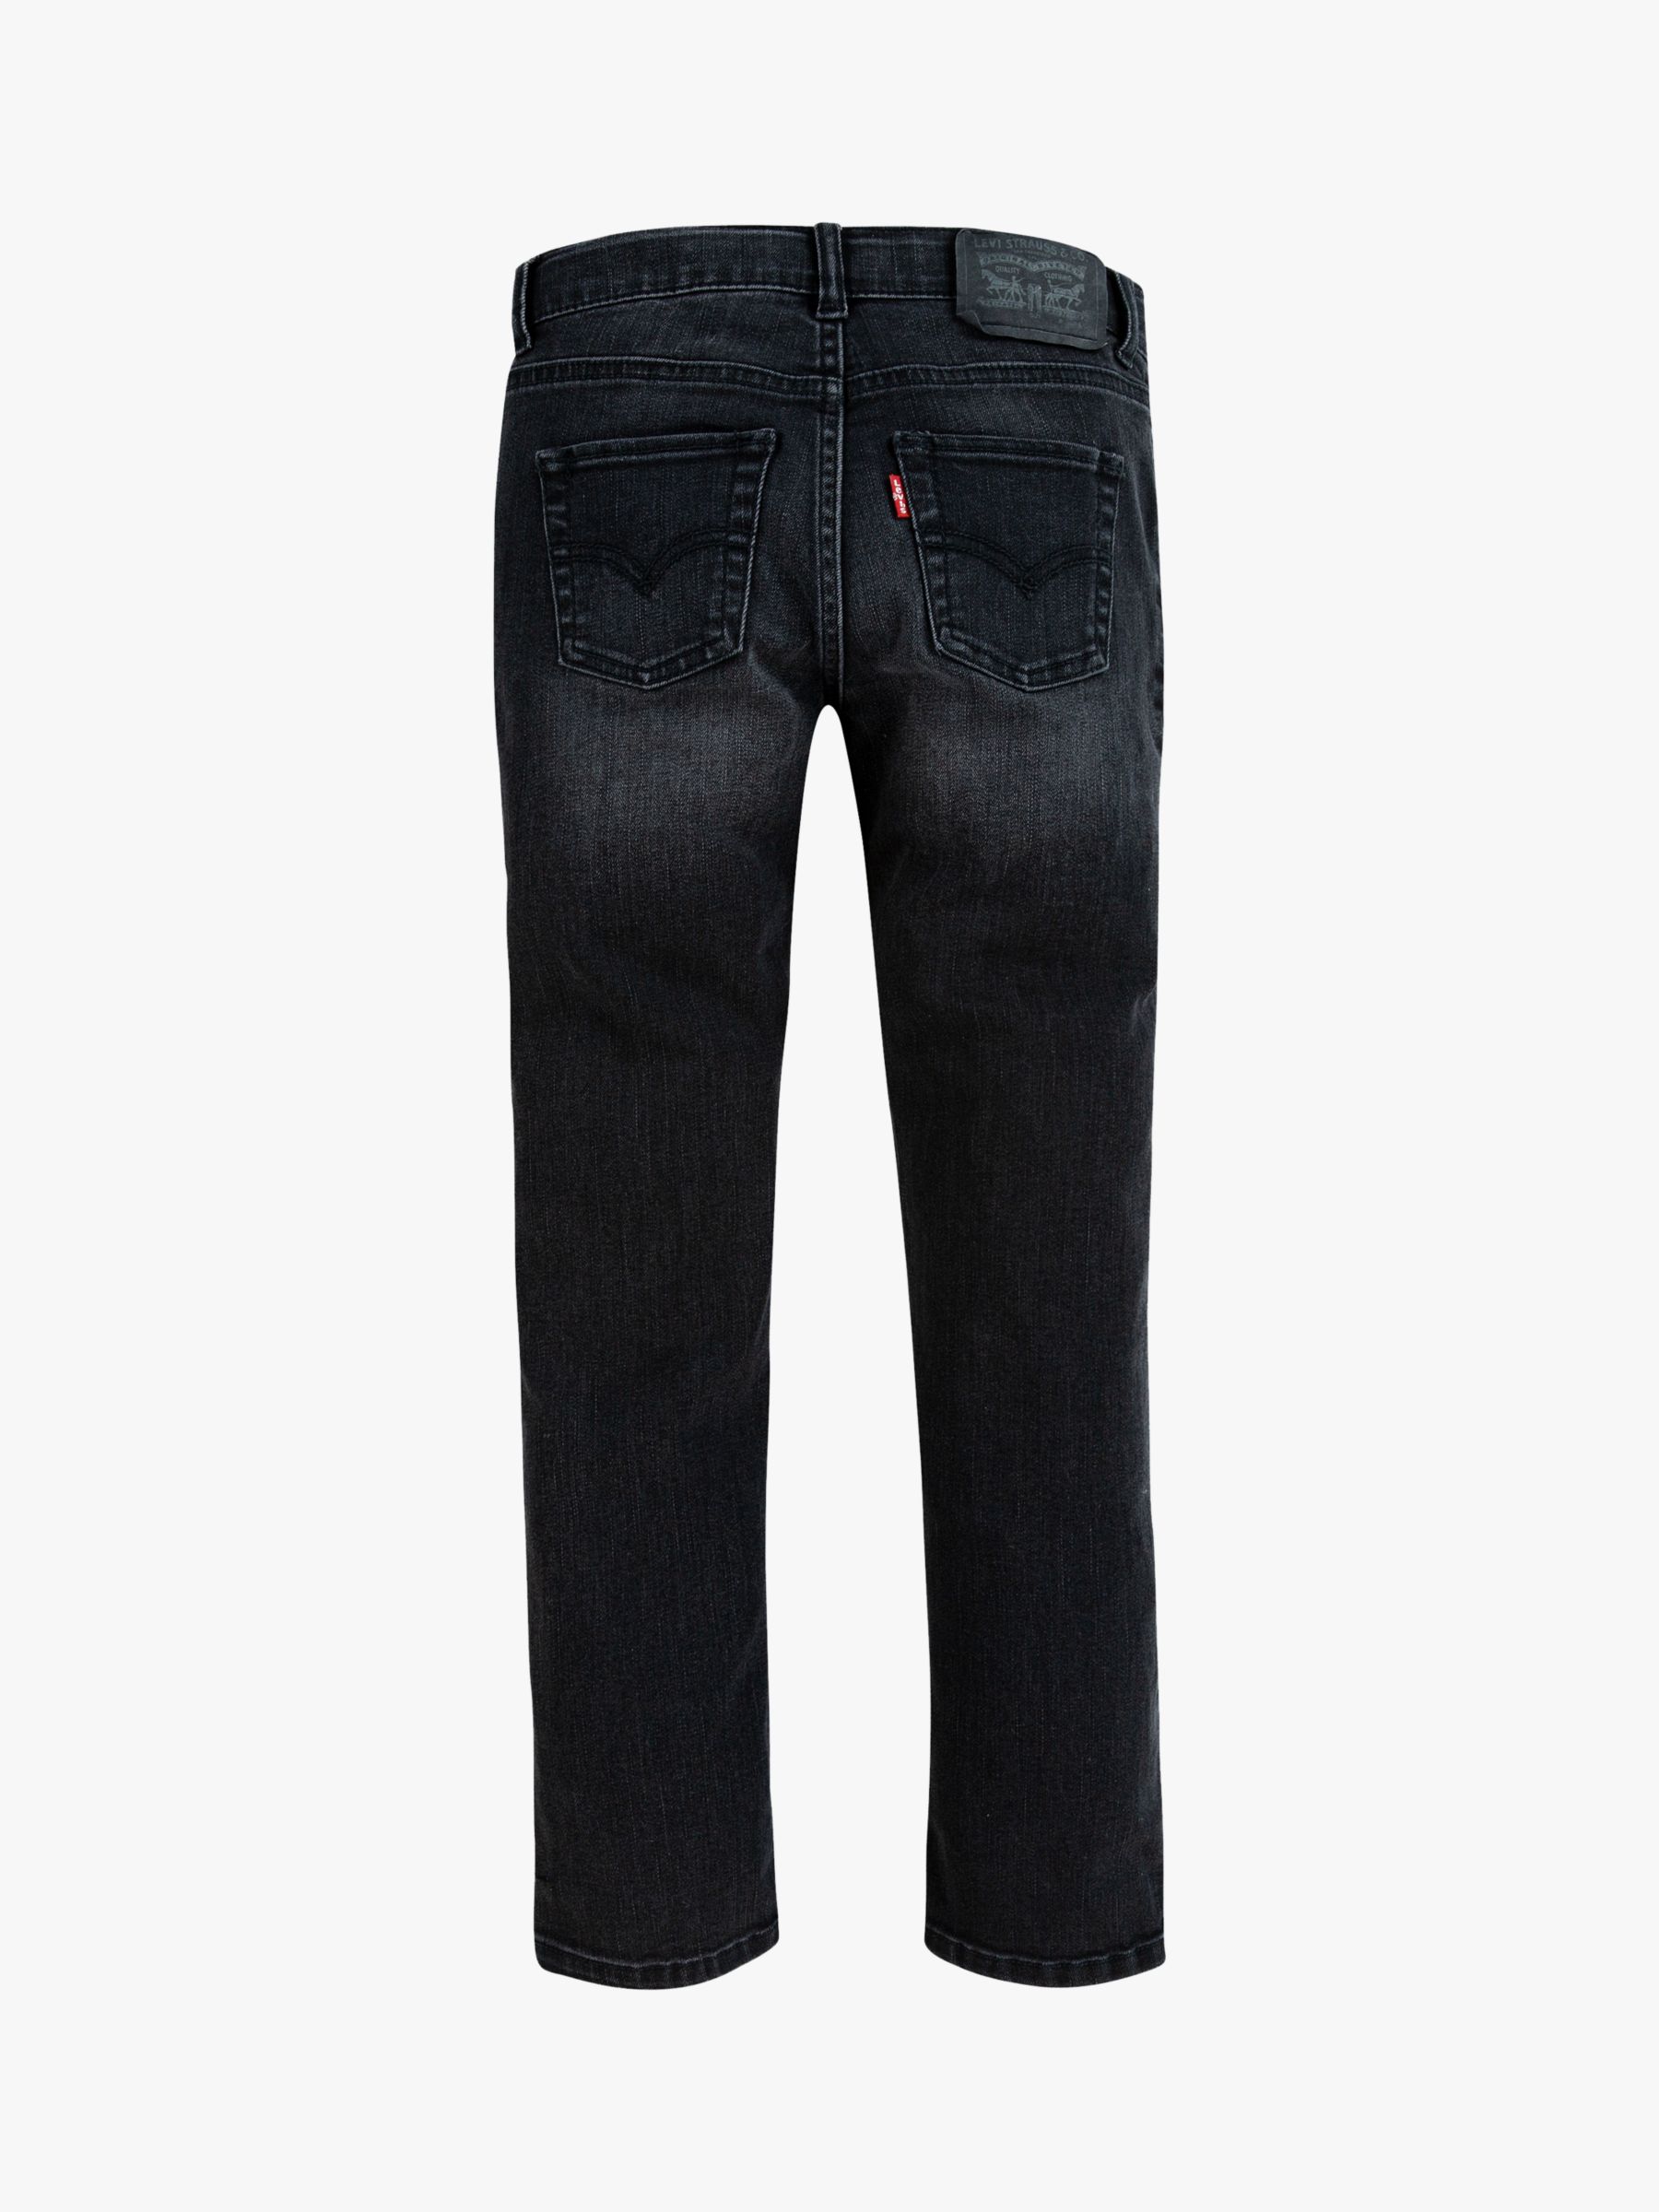 Levi Boys' 510 Skinny Fit Jeans, Black at John Lewis & Partners